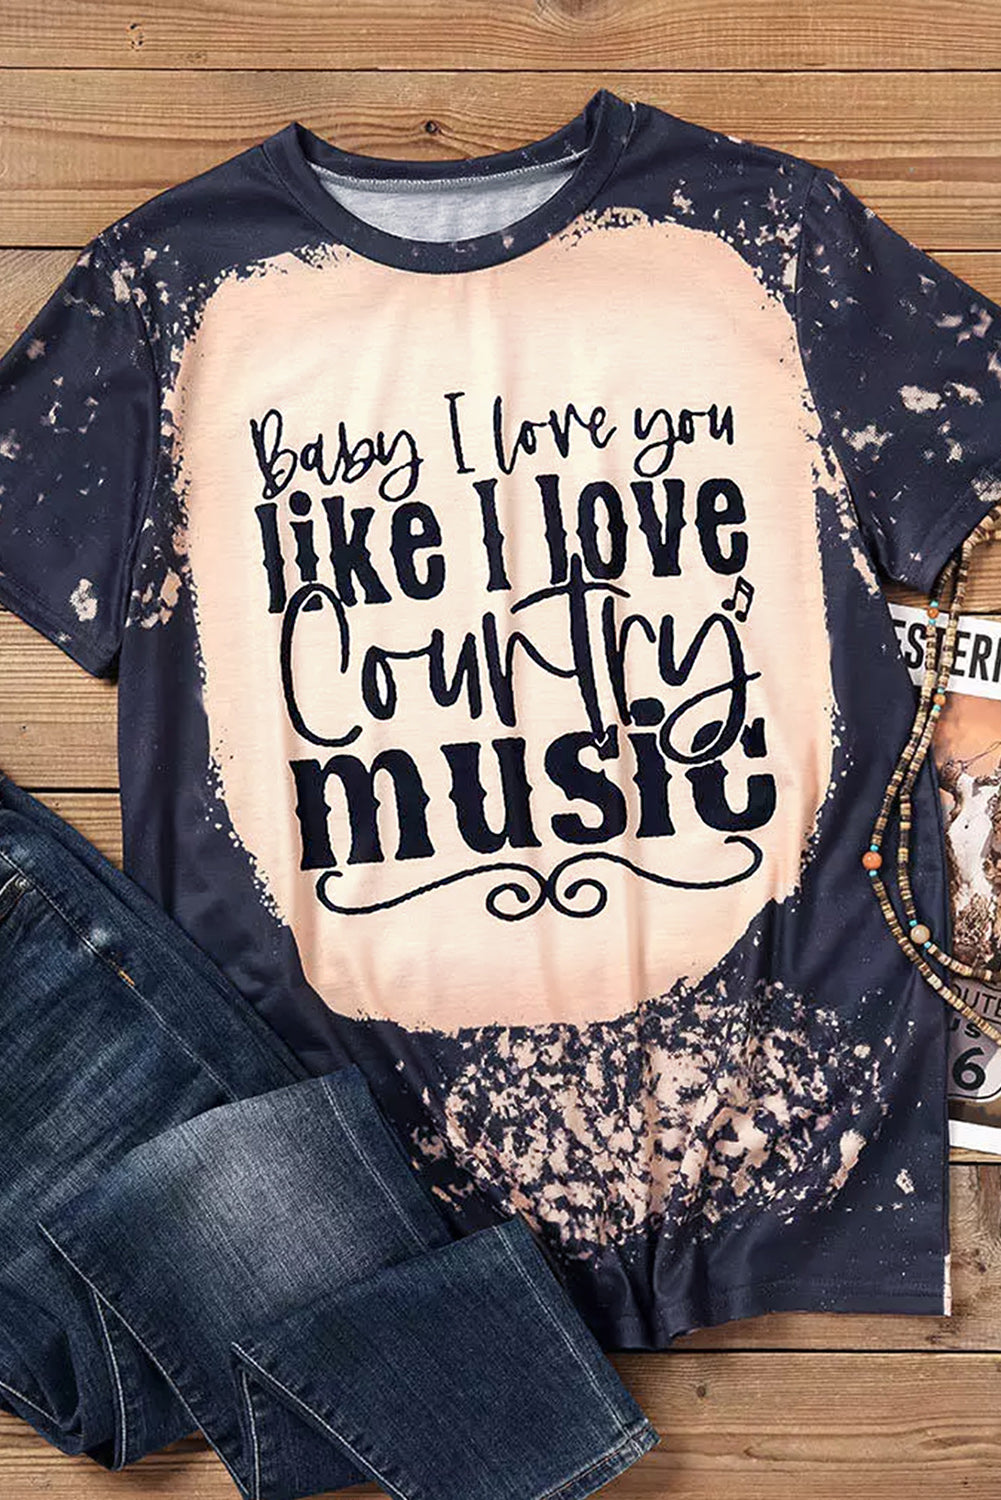 I Love You Like I Love Country Music T-Shirt